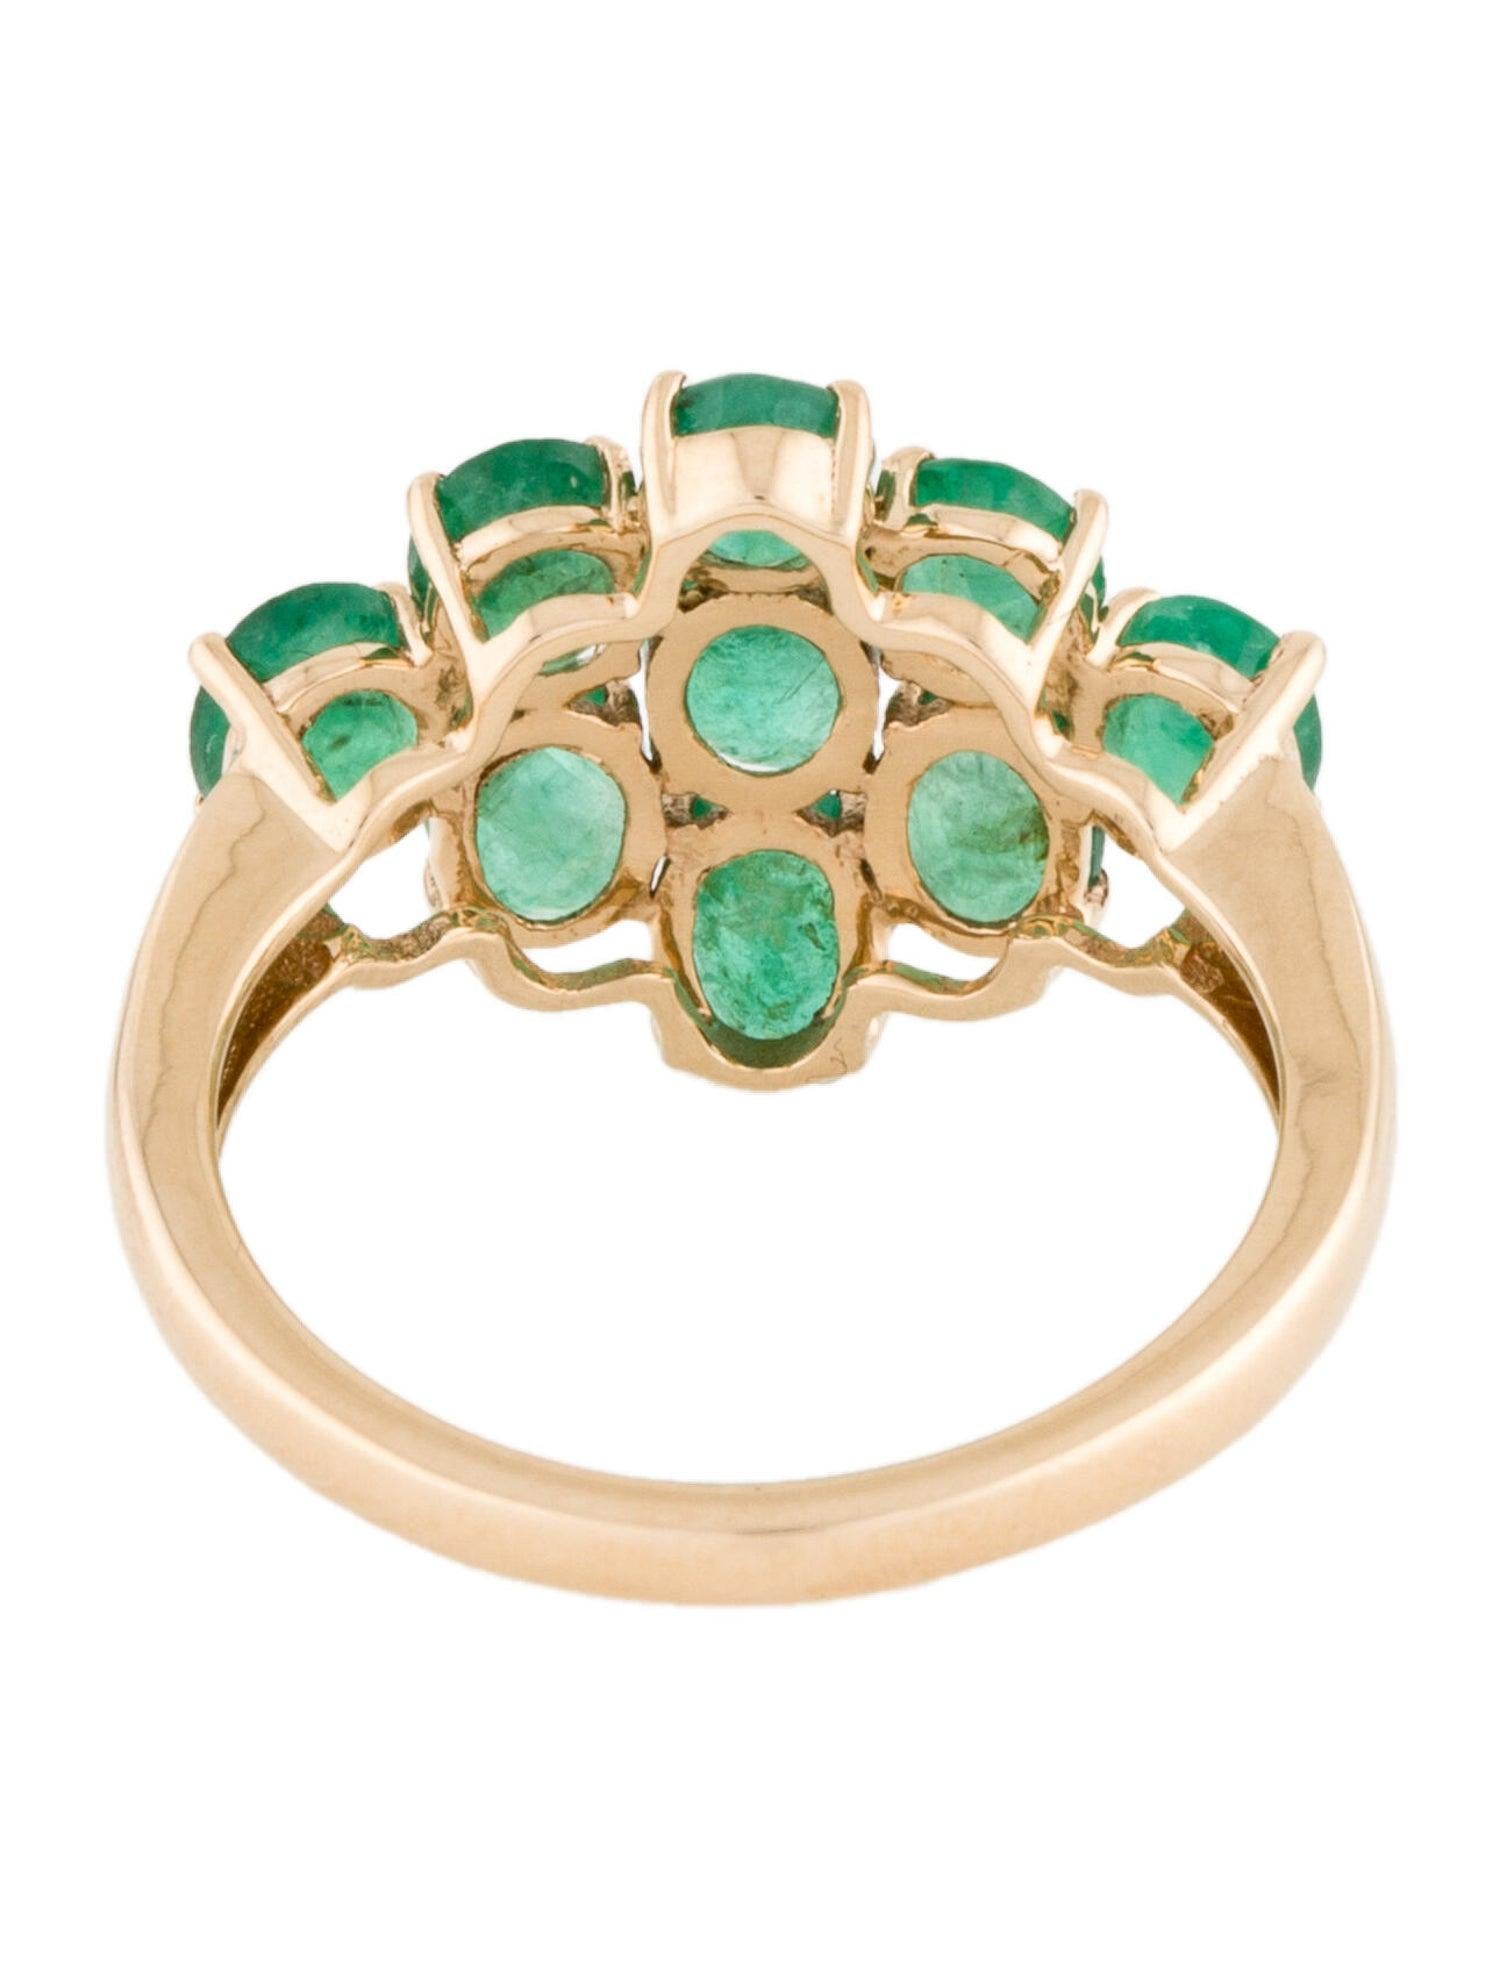 Brilliant Cut 14K Emerald Cocktail Ring Size 6.75 - Elegant Statement Jewelry, Luxury Design For Sale